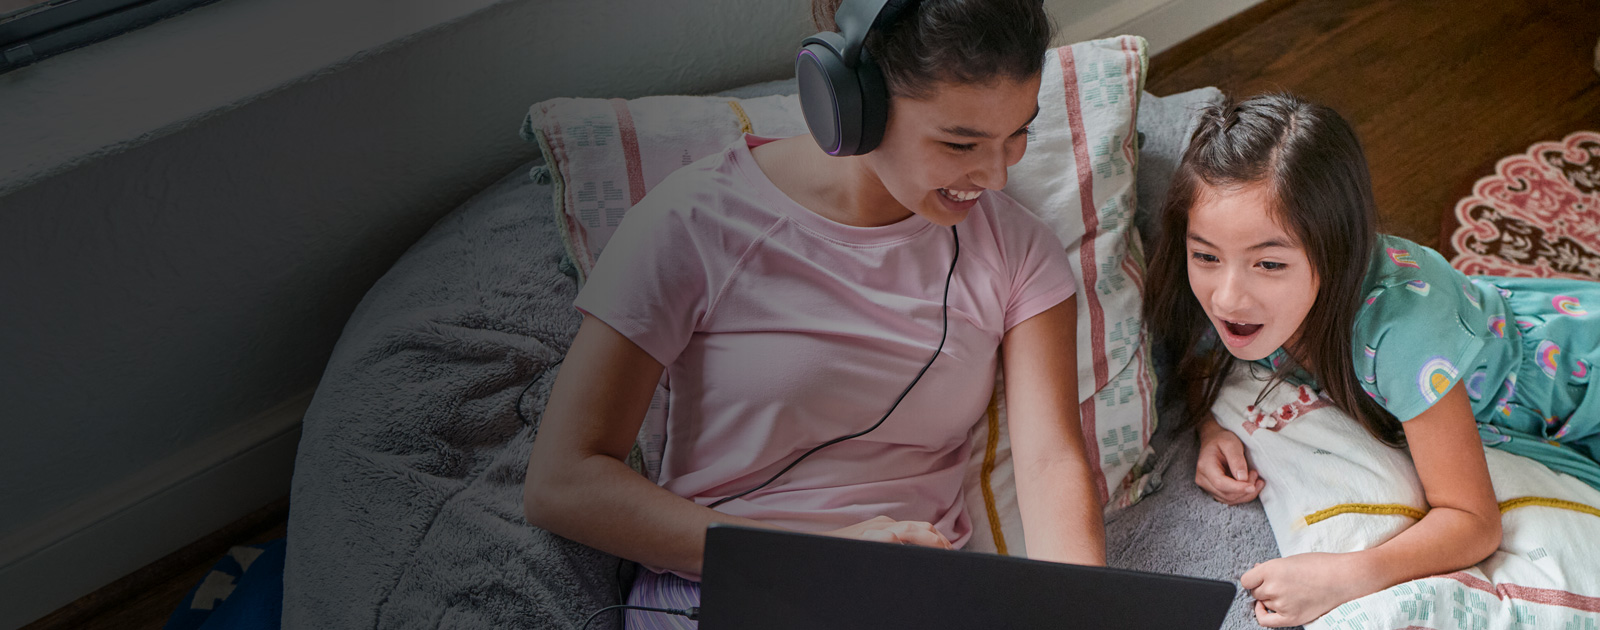 Older sister smiling wearing headphones, showing younger sister laptop.